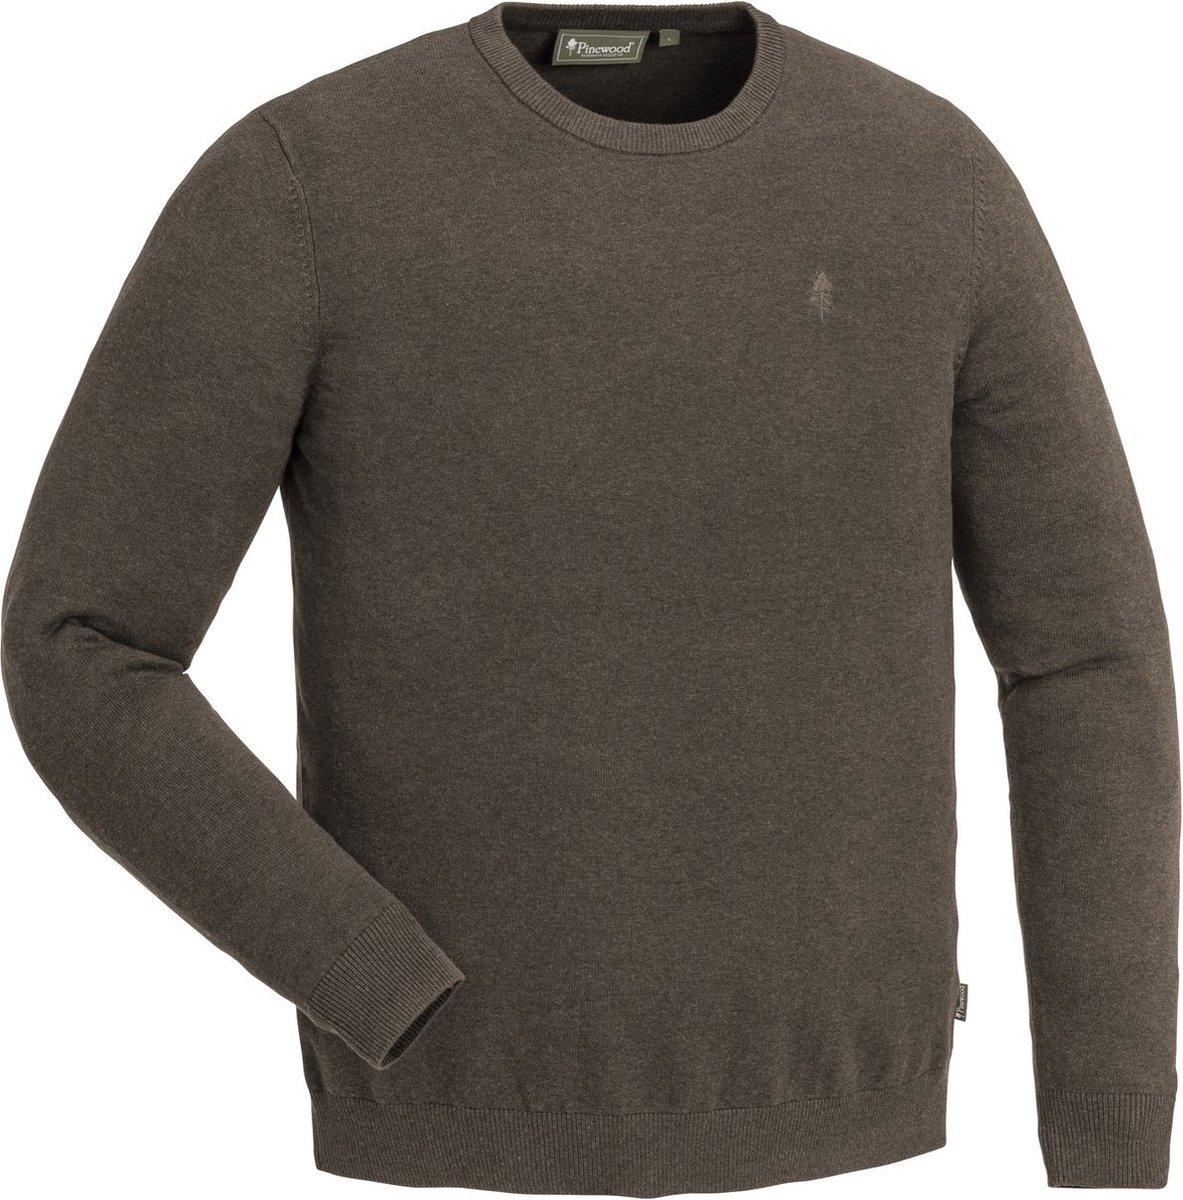 Värnamo Crewneck Knitted Sweater - Brown Melange